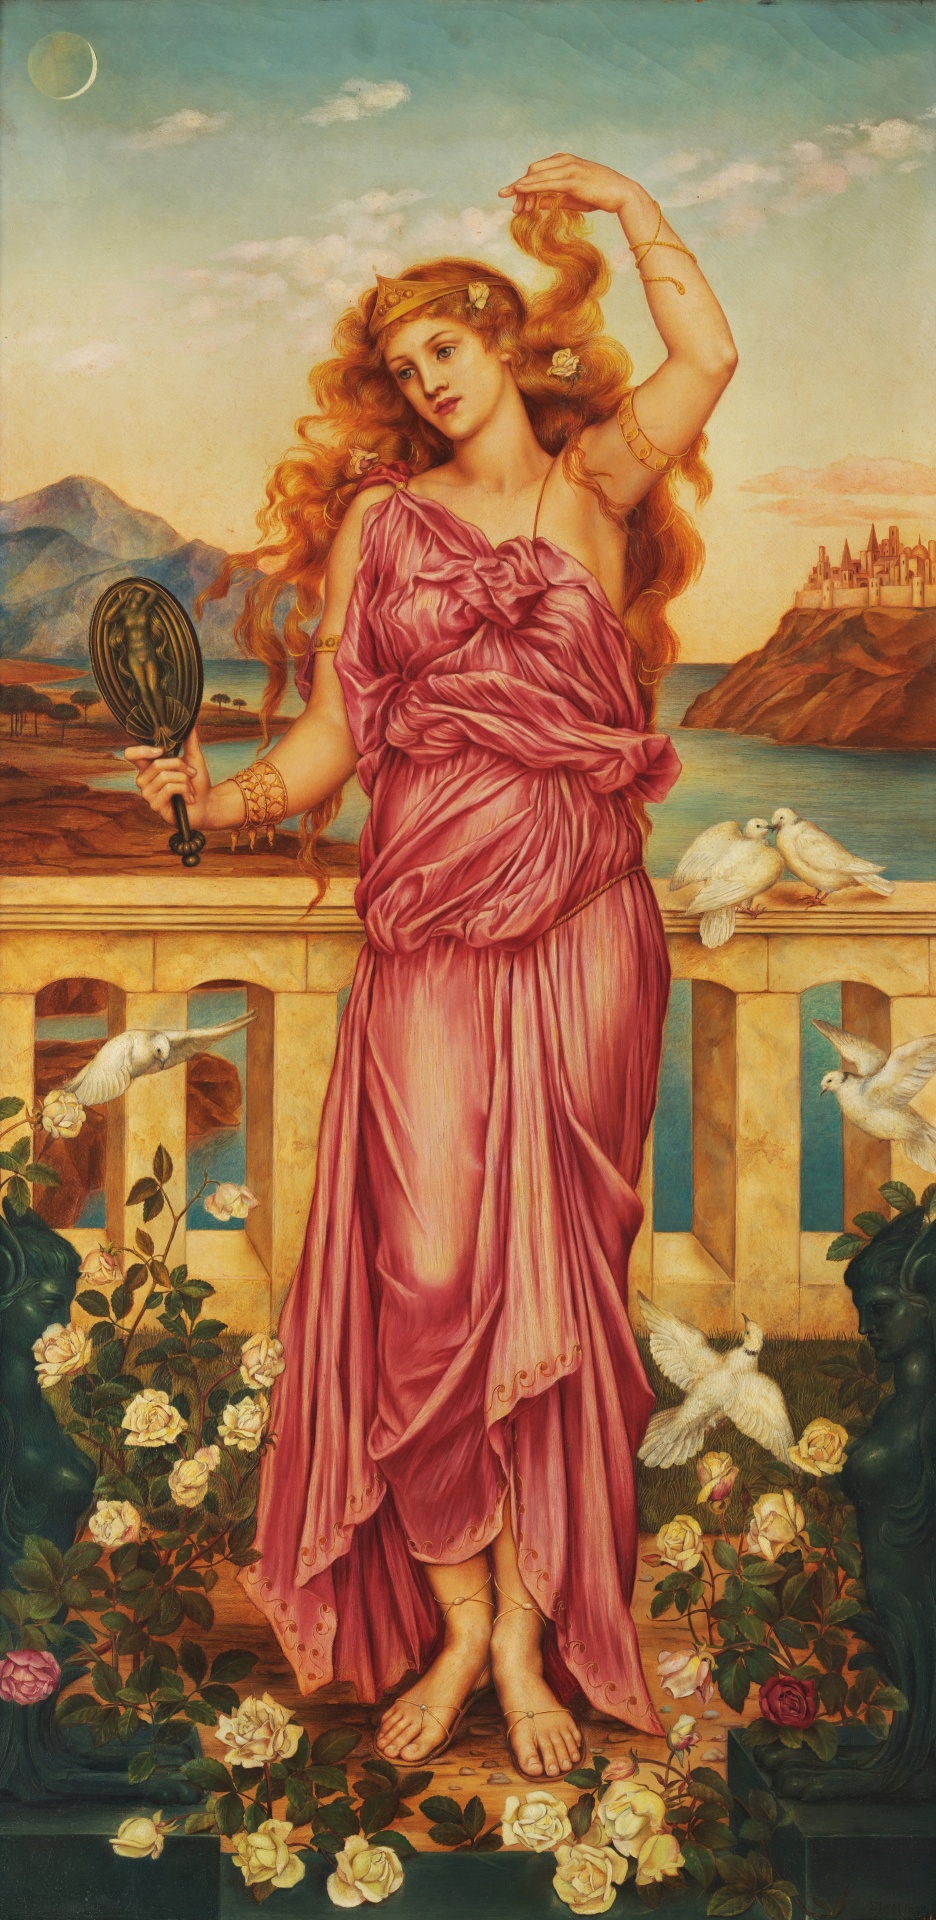 Evelyn de Morgan Vintage Art Painting Beautiful Woman Helen of Troy in the Rose Garden HD Art Print Poster Public Domain